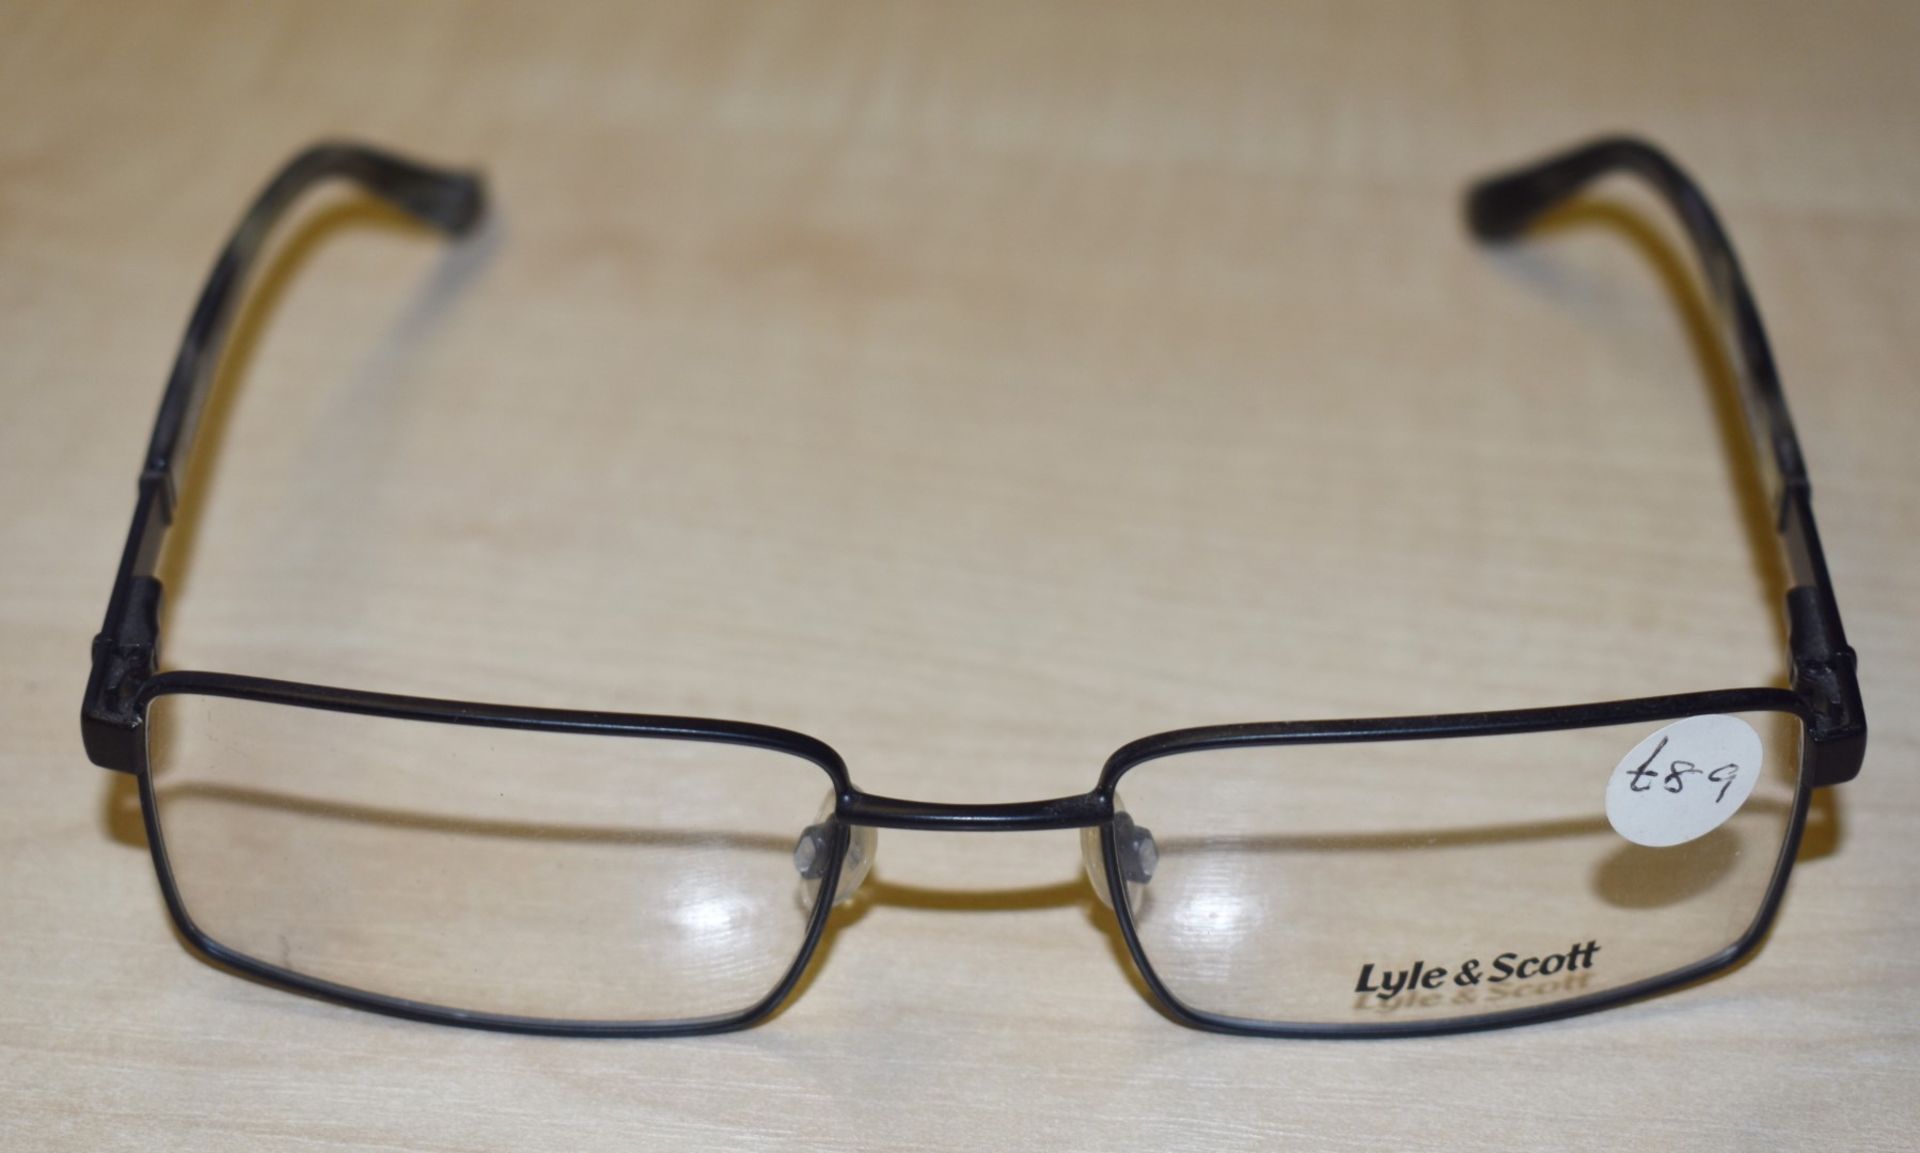 1 x Genuine LYLE & SCOTT Spectacle Eye Glasses Frame - Ex Display Stock  - Ref: GTI200 - CL645 -